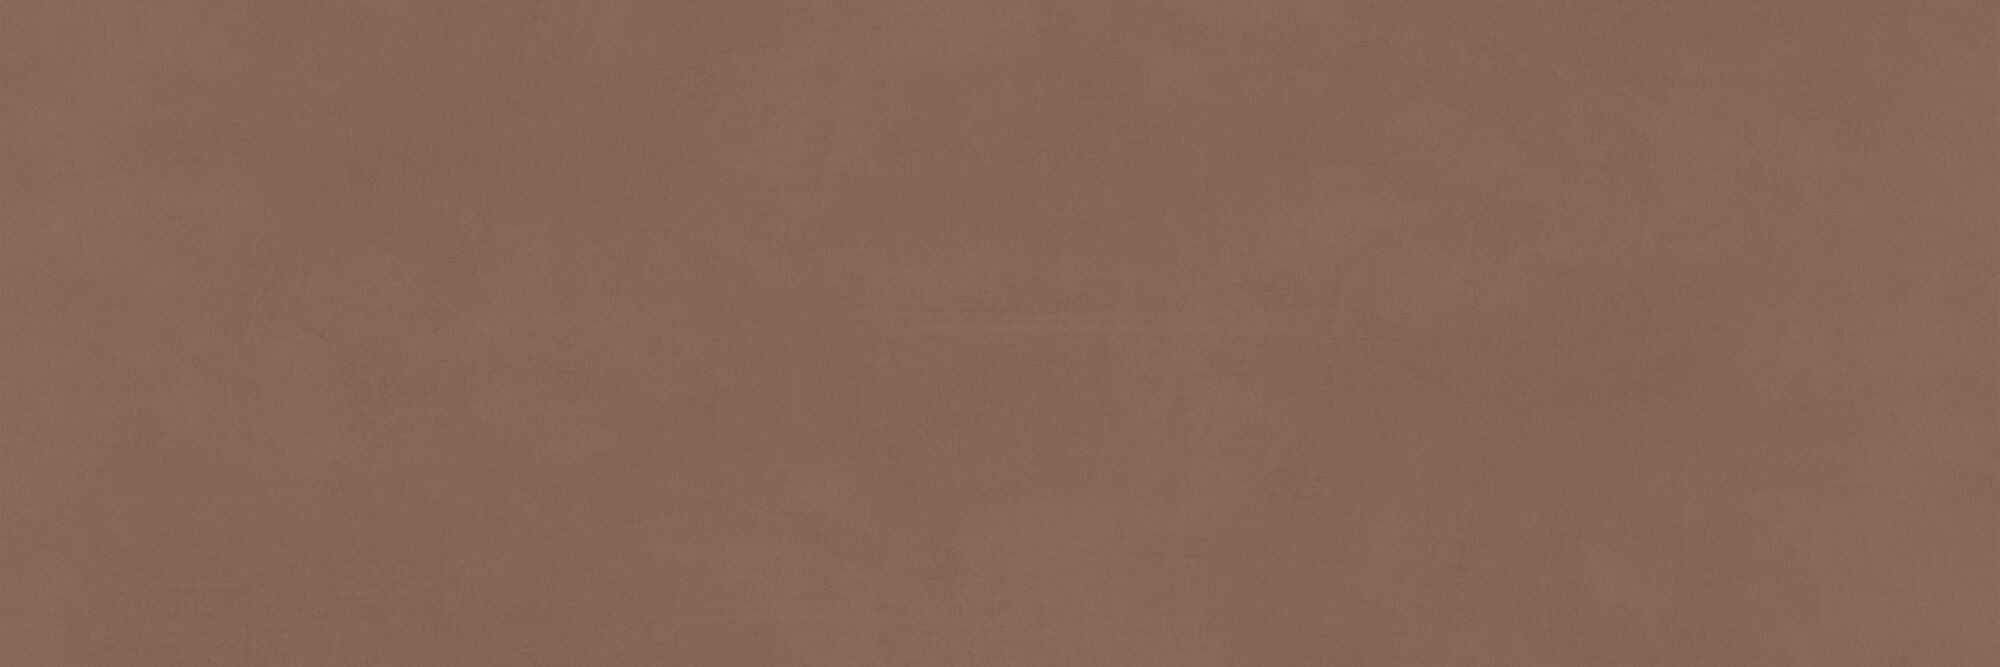 Плитка Meissen Keramik Fragmenti коричневый 25x75 A16500 5